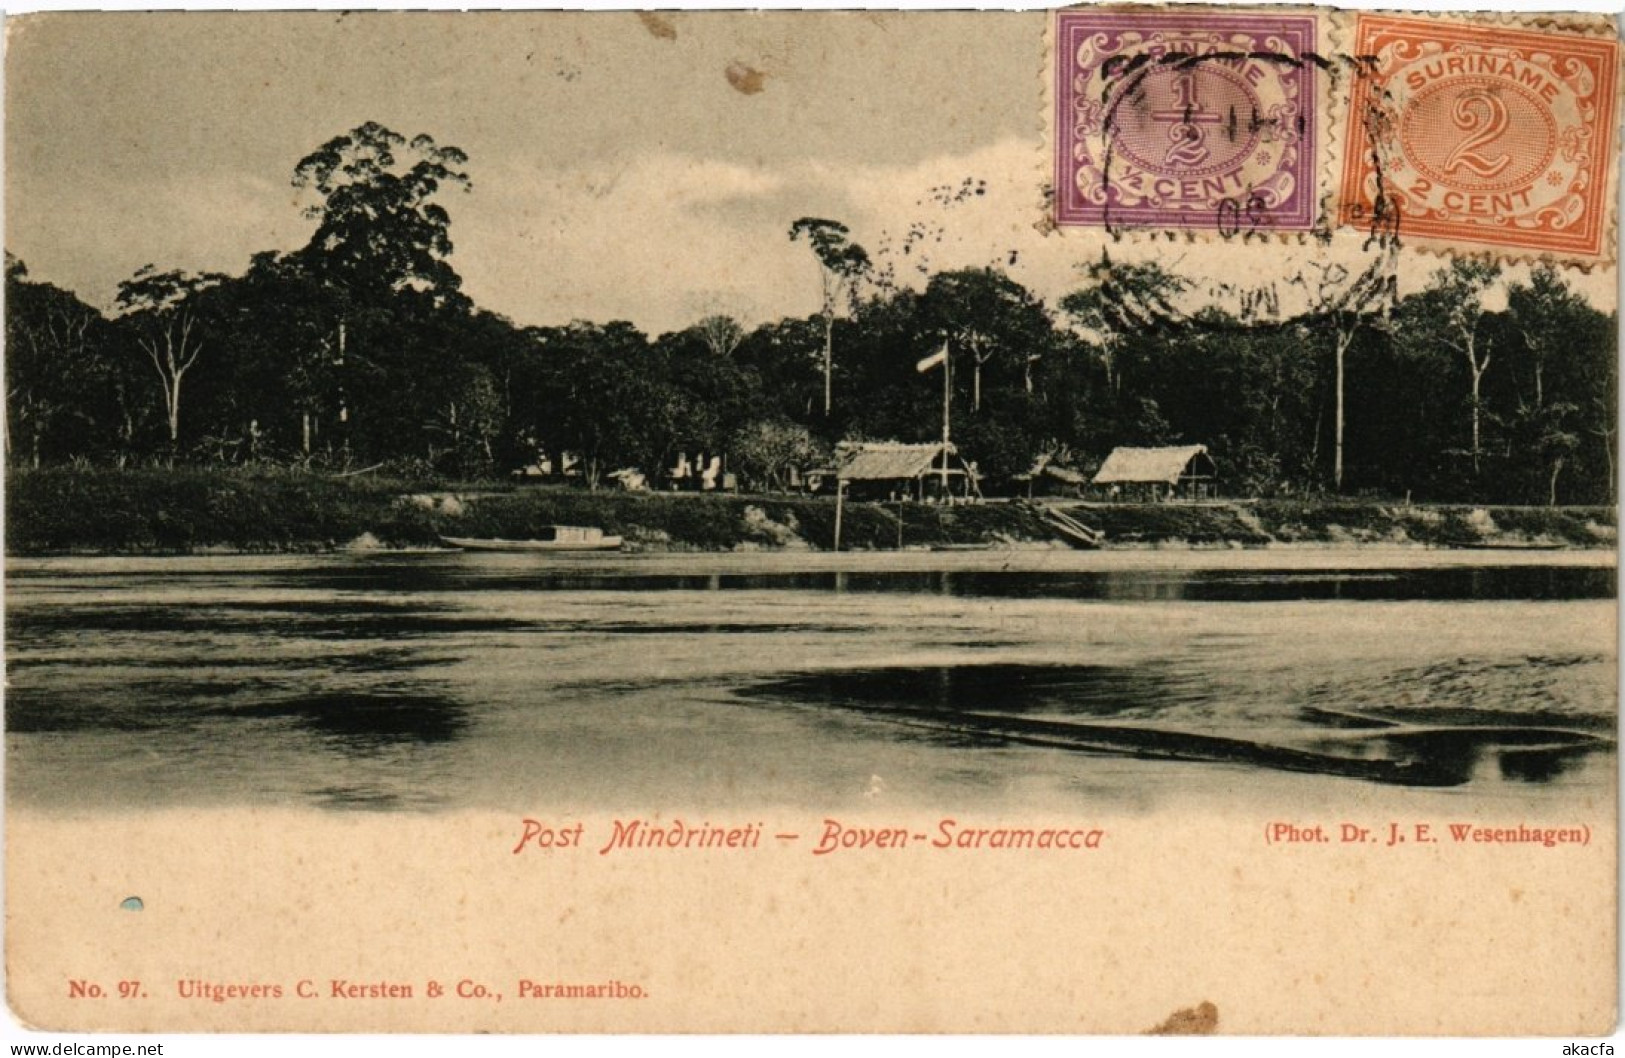 PC SURINAME POST MINDRINETI - BOVEN - SARAMACCA (a2397) - Suriname